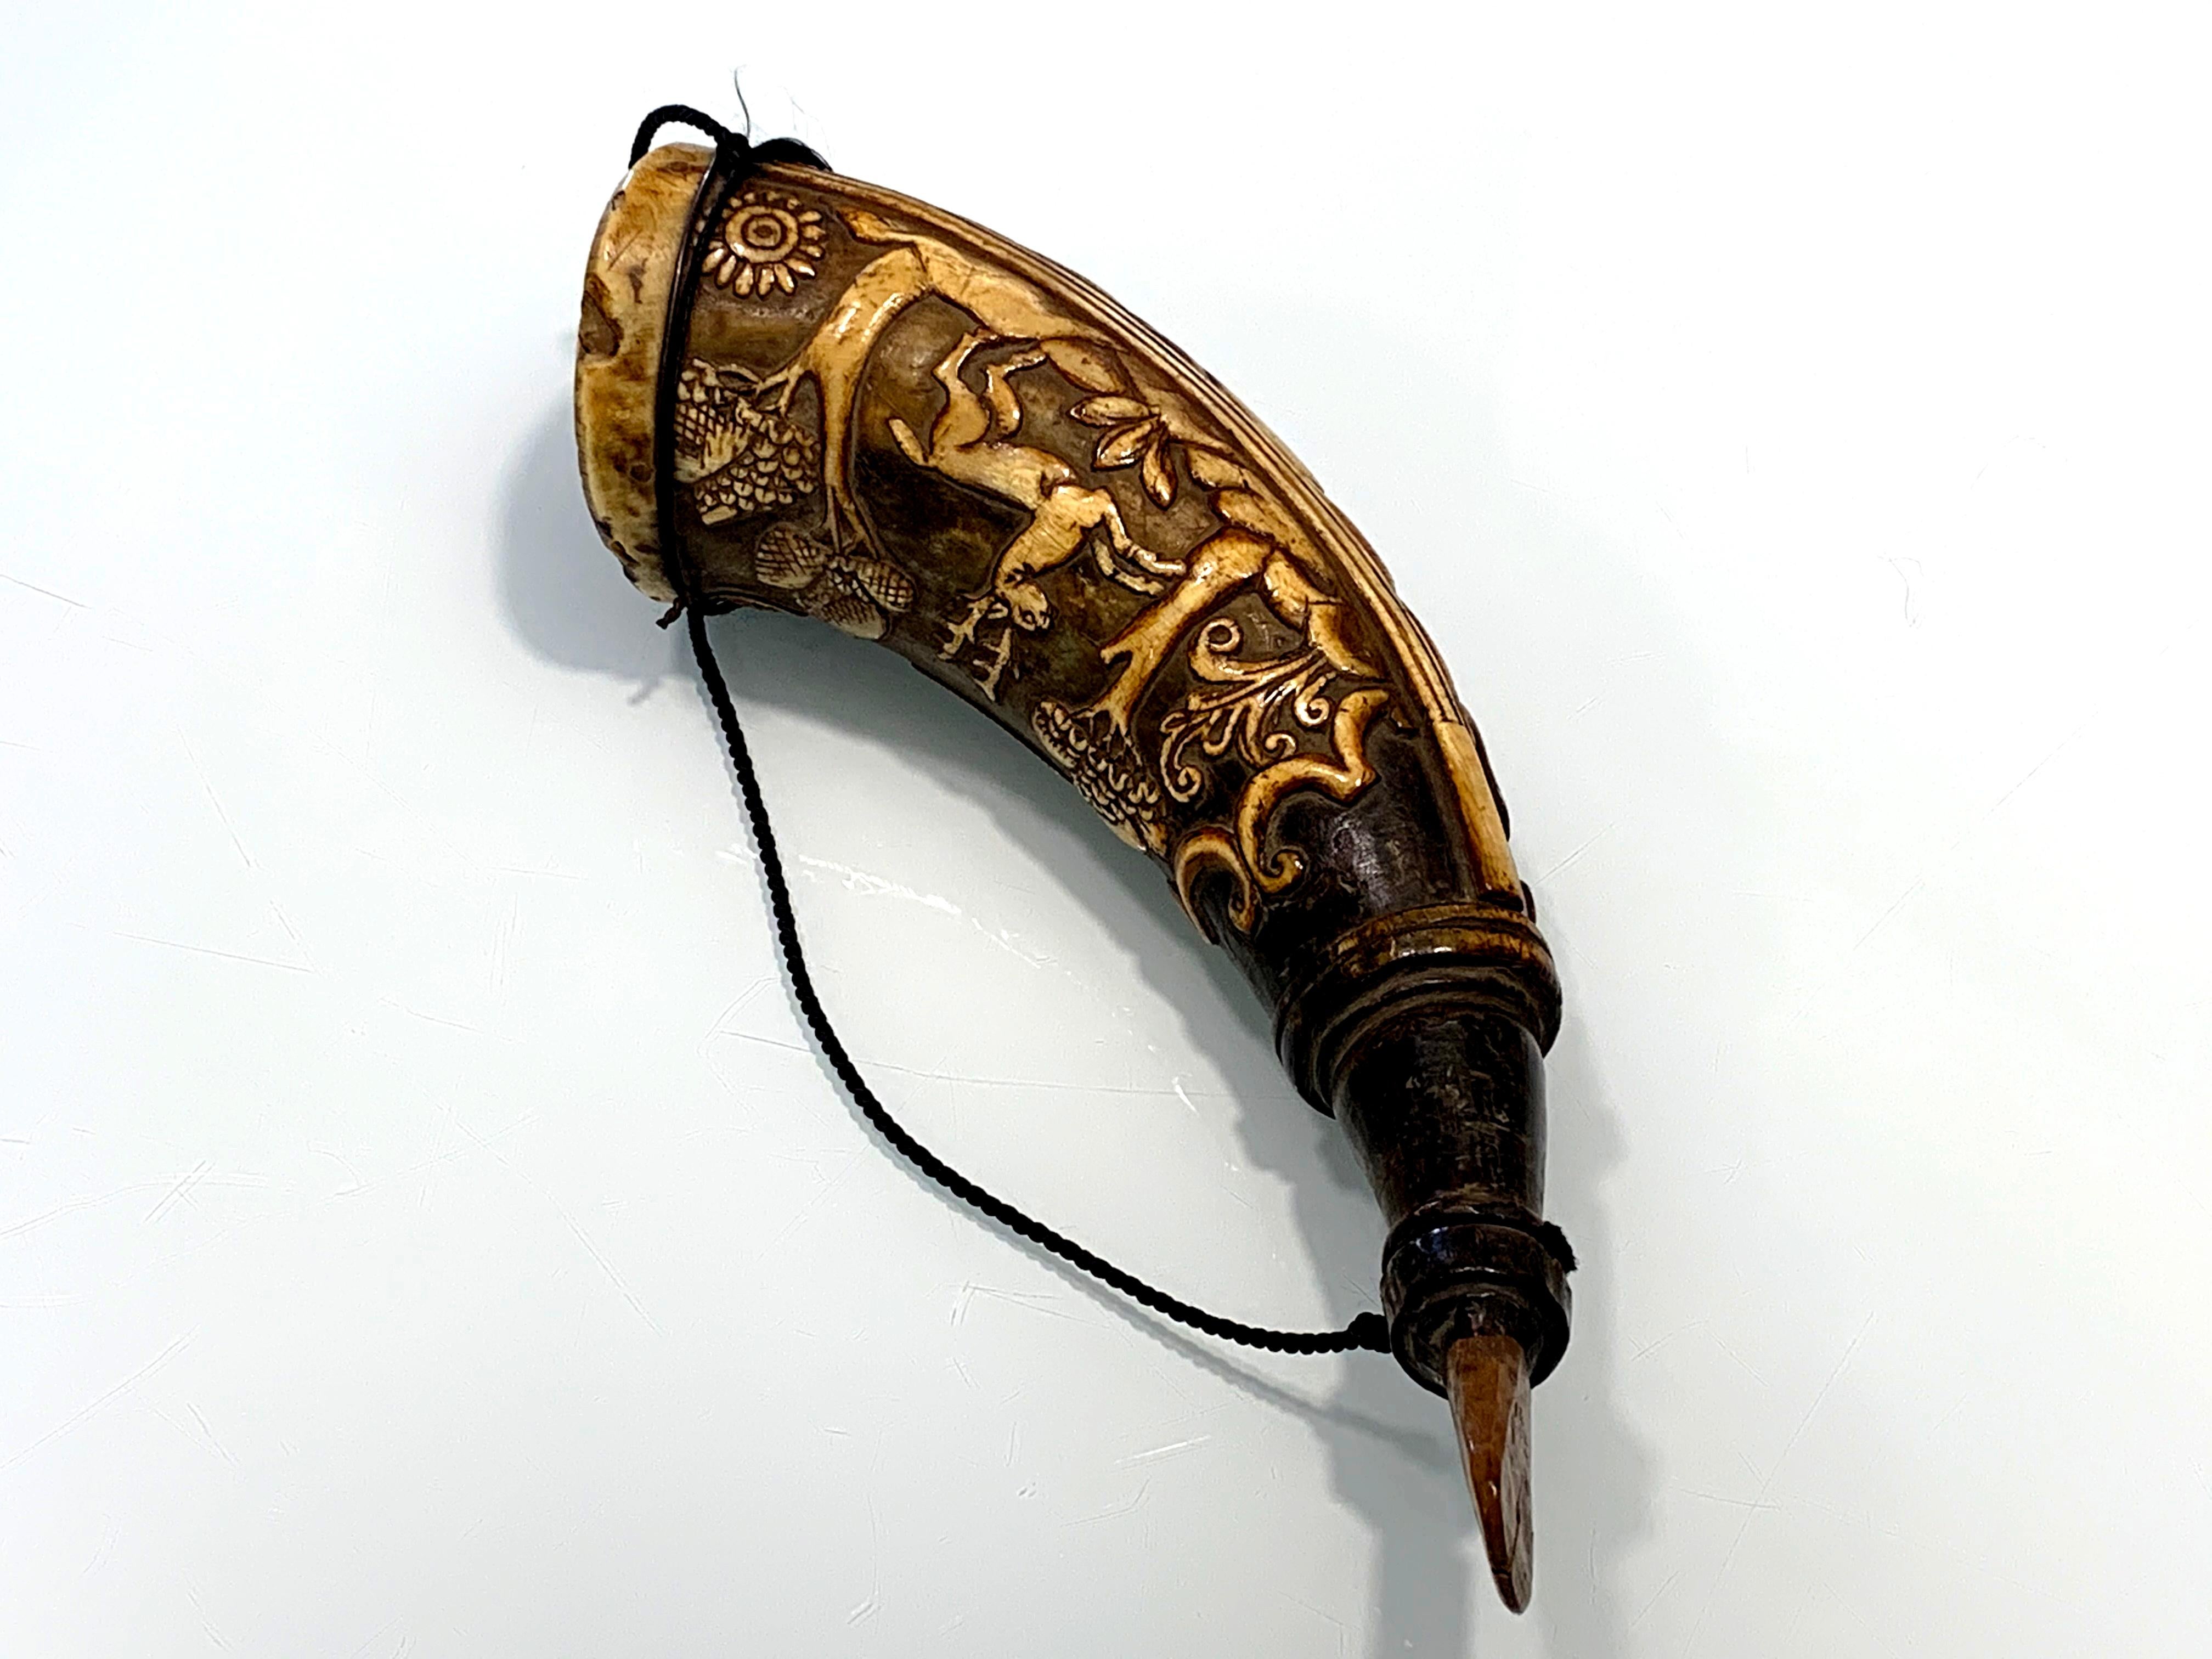 18th century powder horns